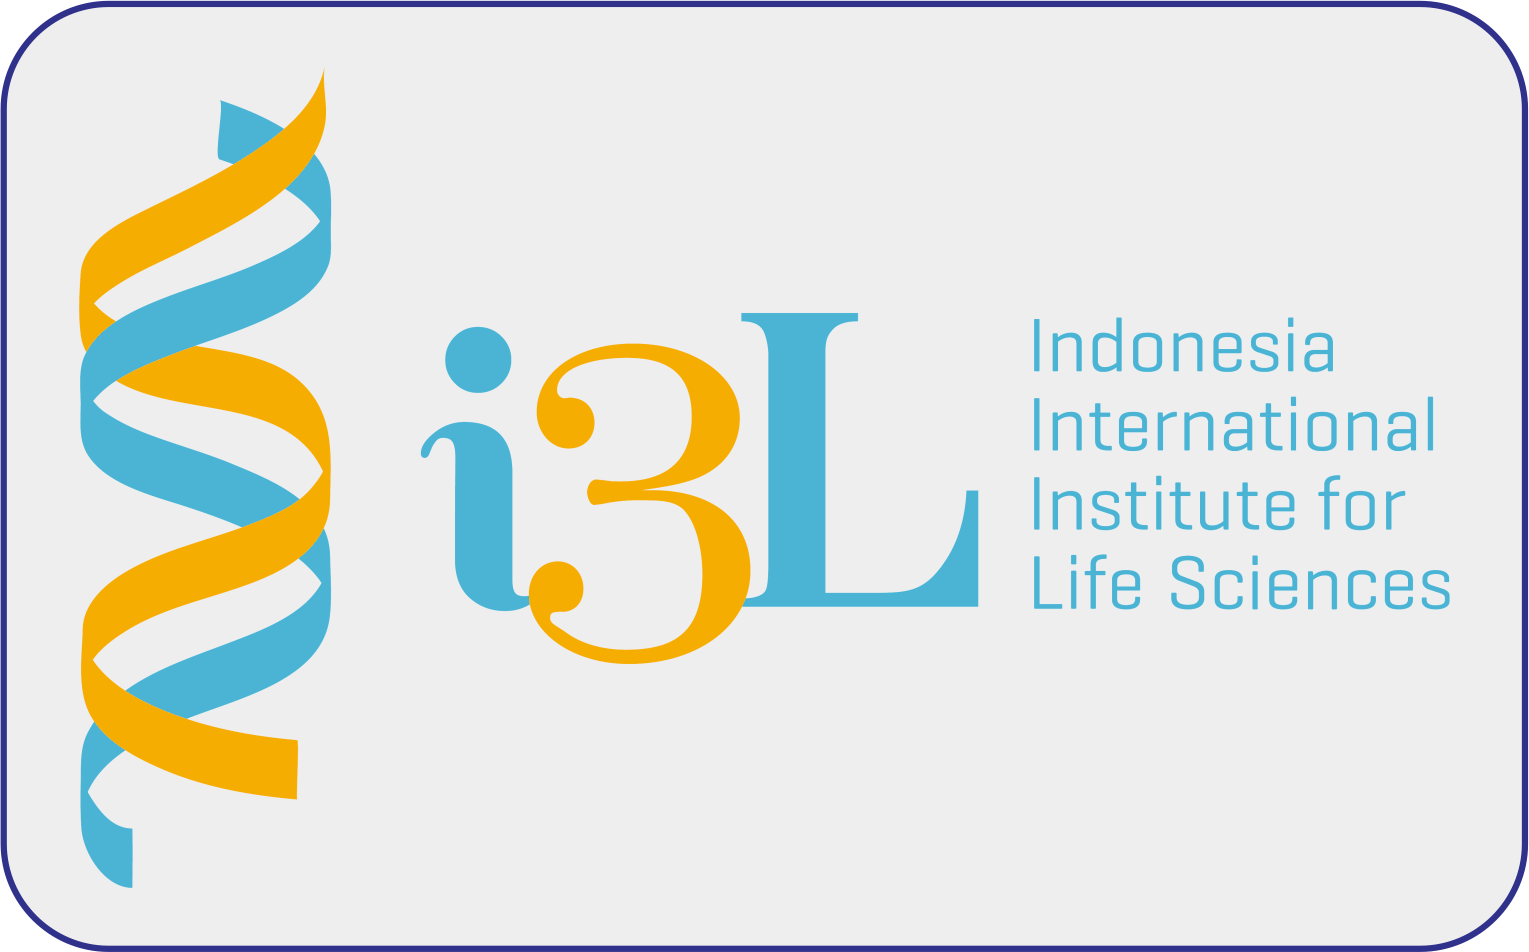 Indonesia International Institute for Life Sciences (I3L)